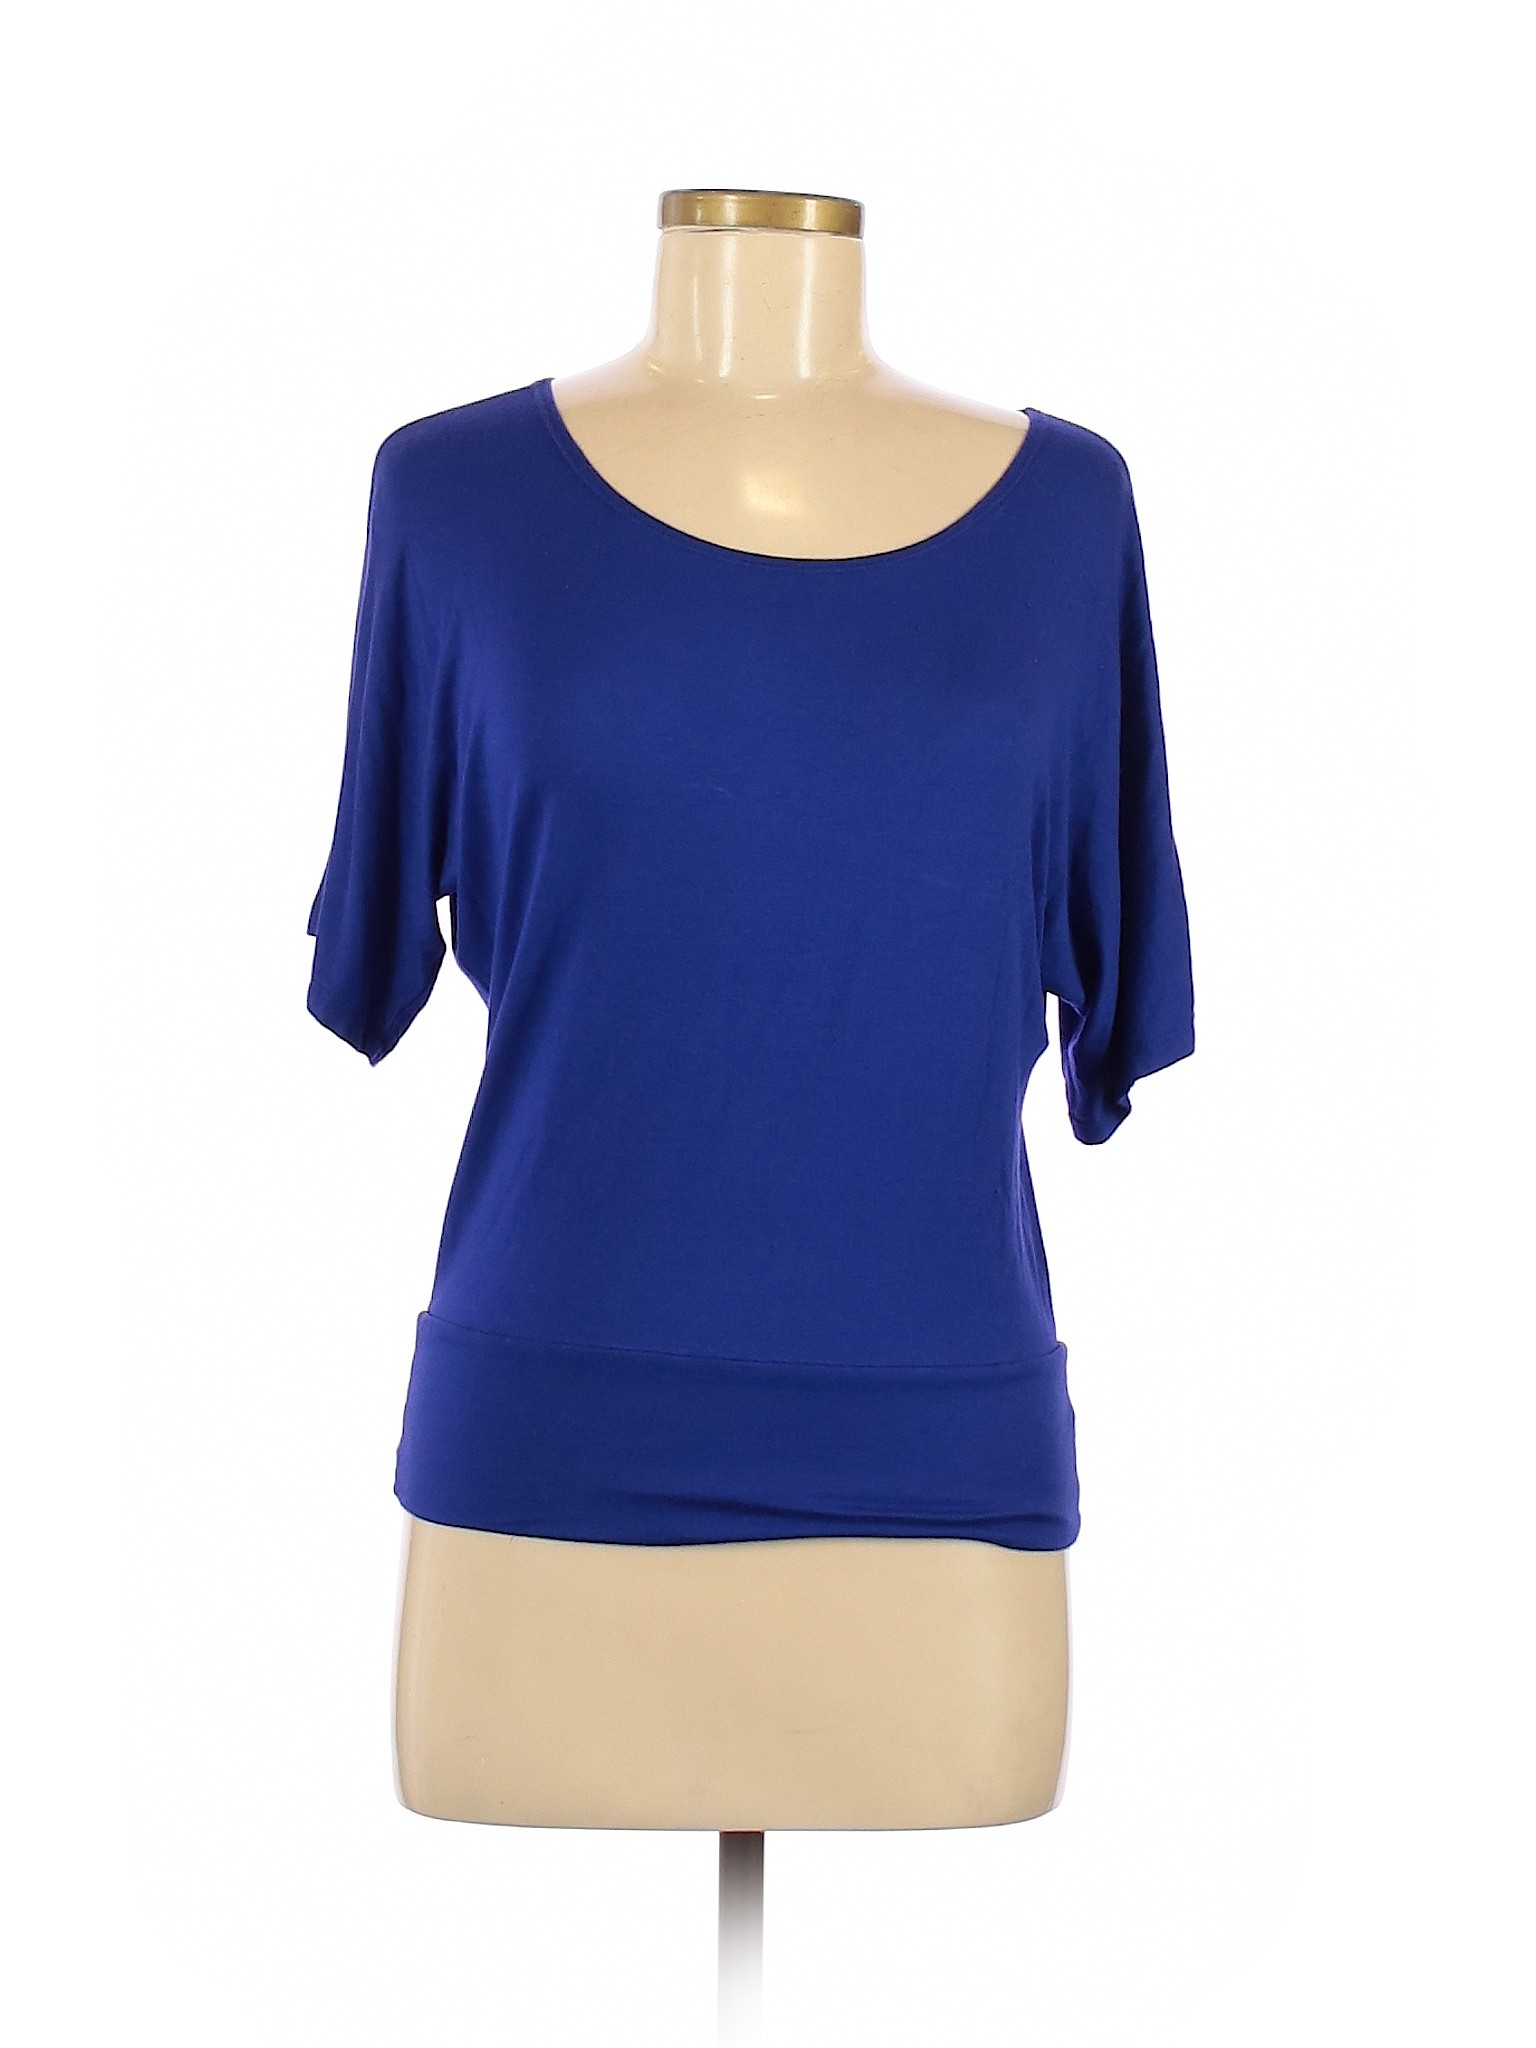 Ashley Blue Solid Blue Short Sleeve Blouse Size M - 55% off | thredUP